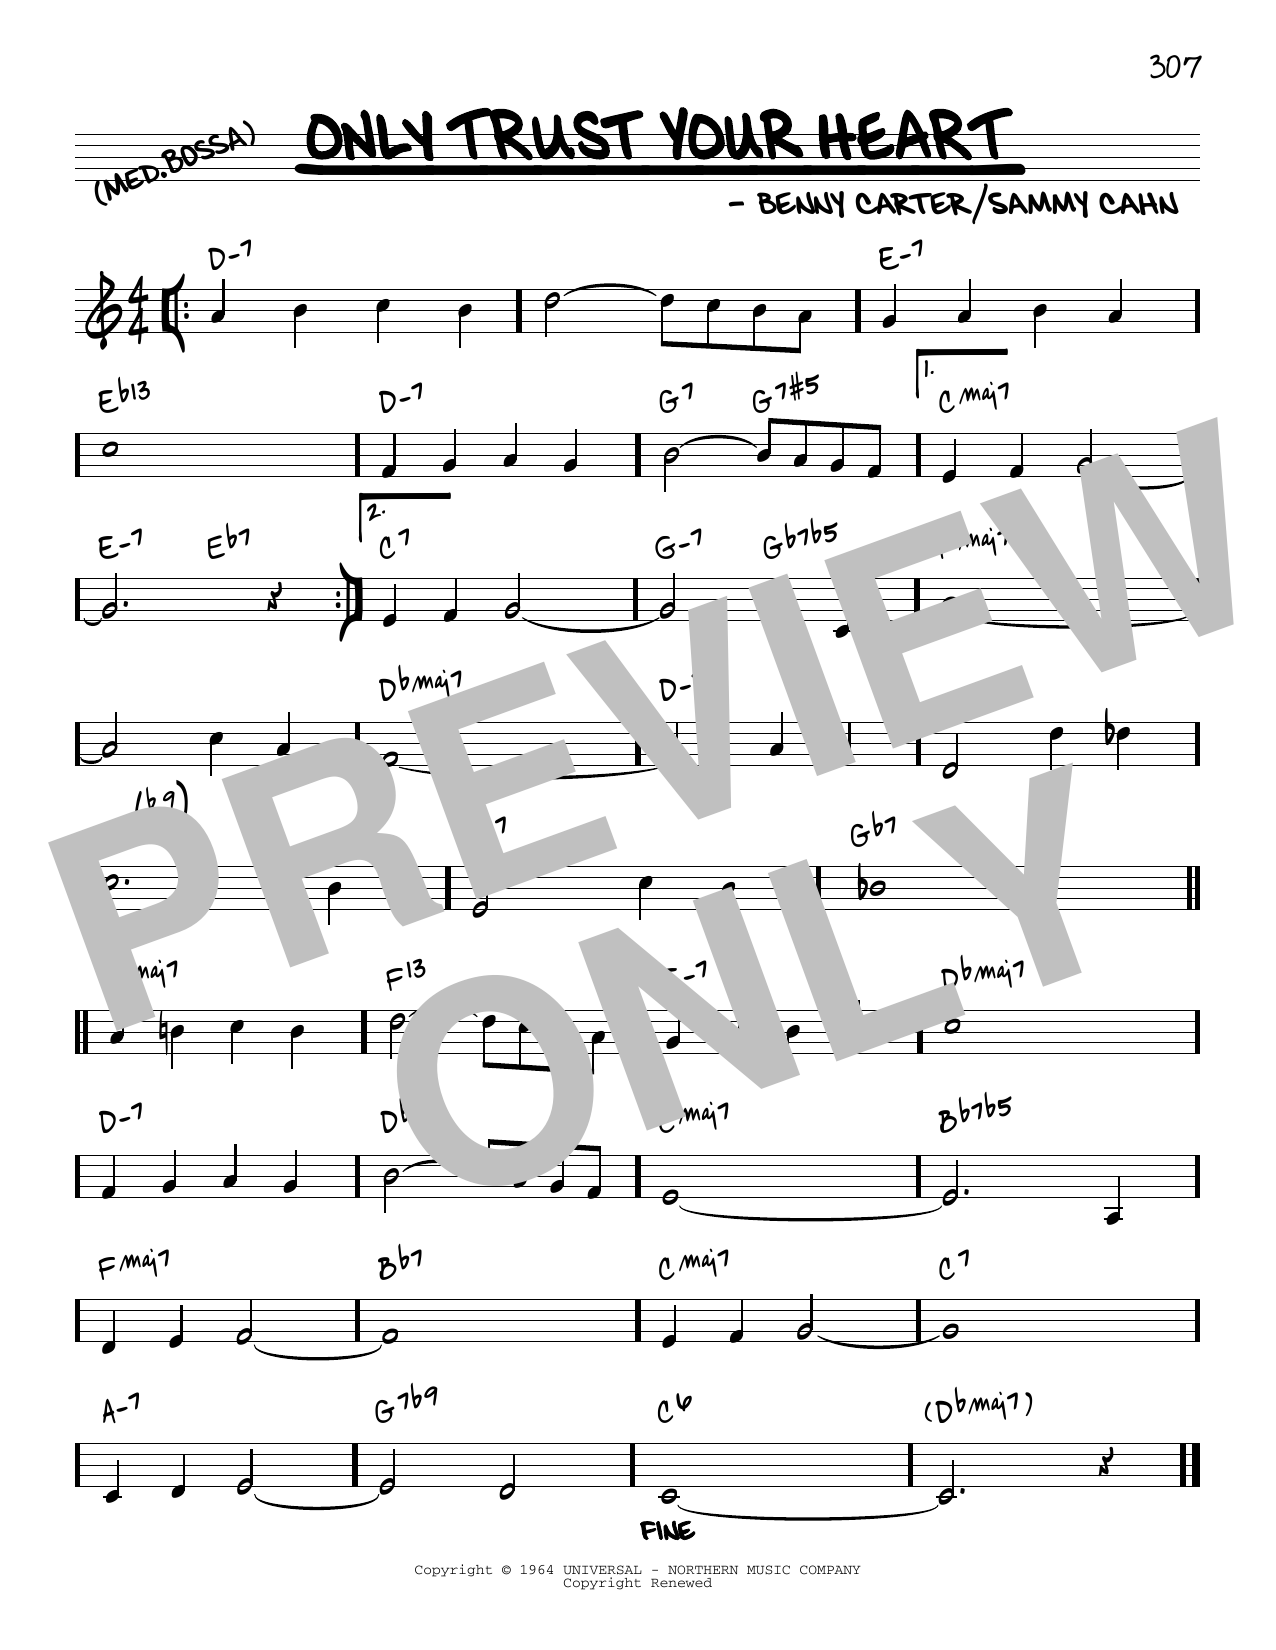 Download Benny Carter Only Trust Your Heart [Reharmonized ver Sheet Music